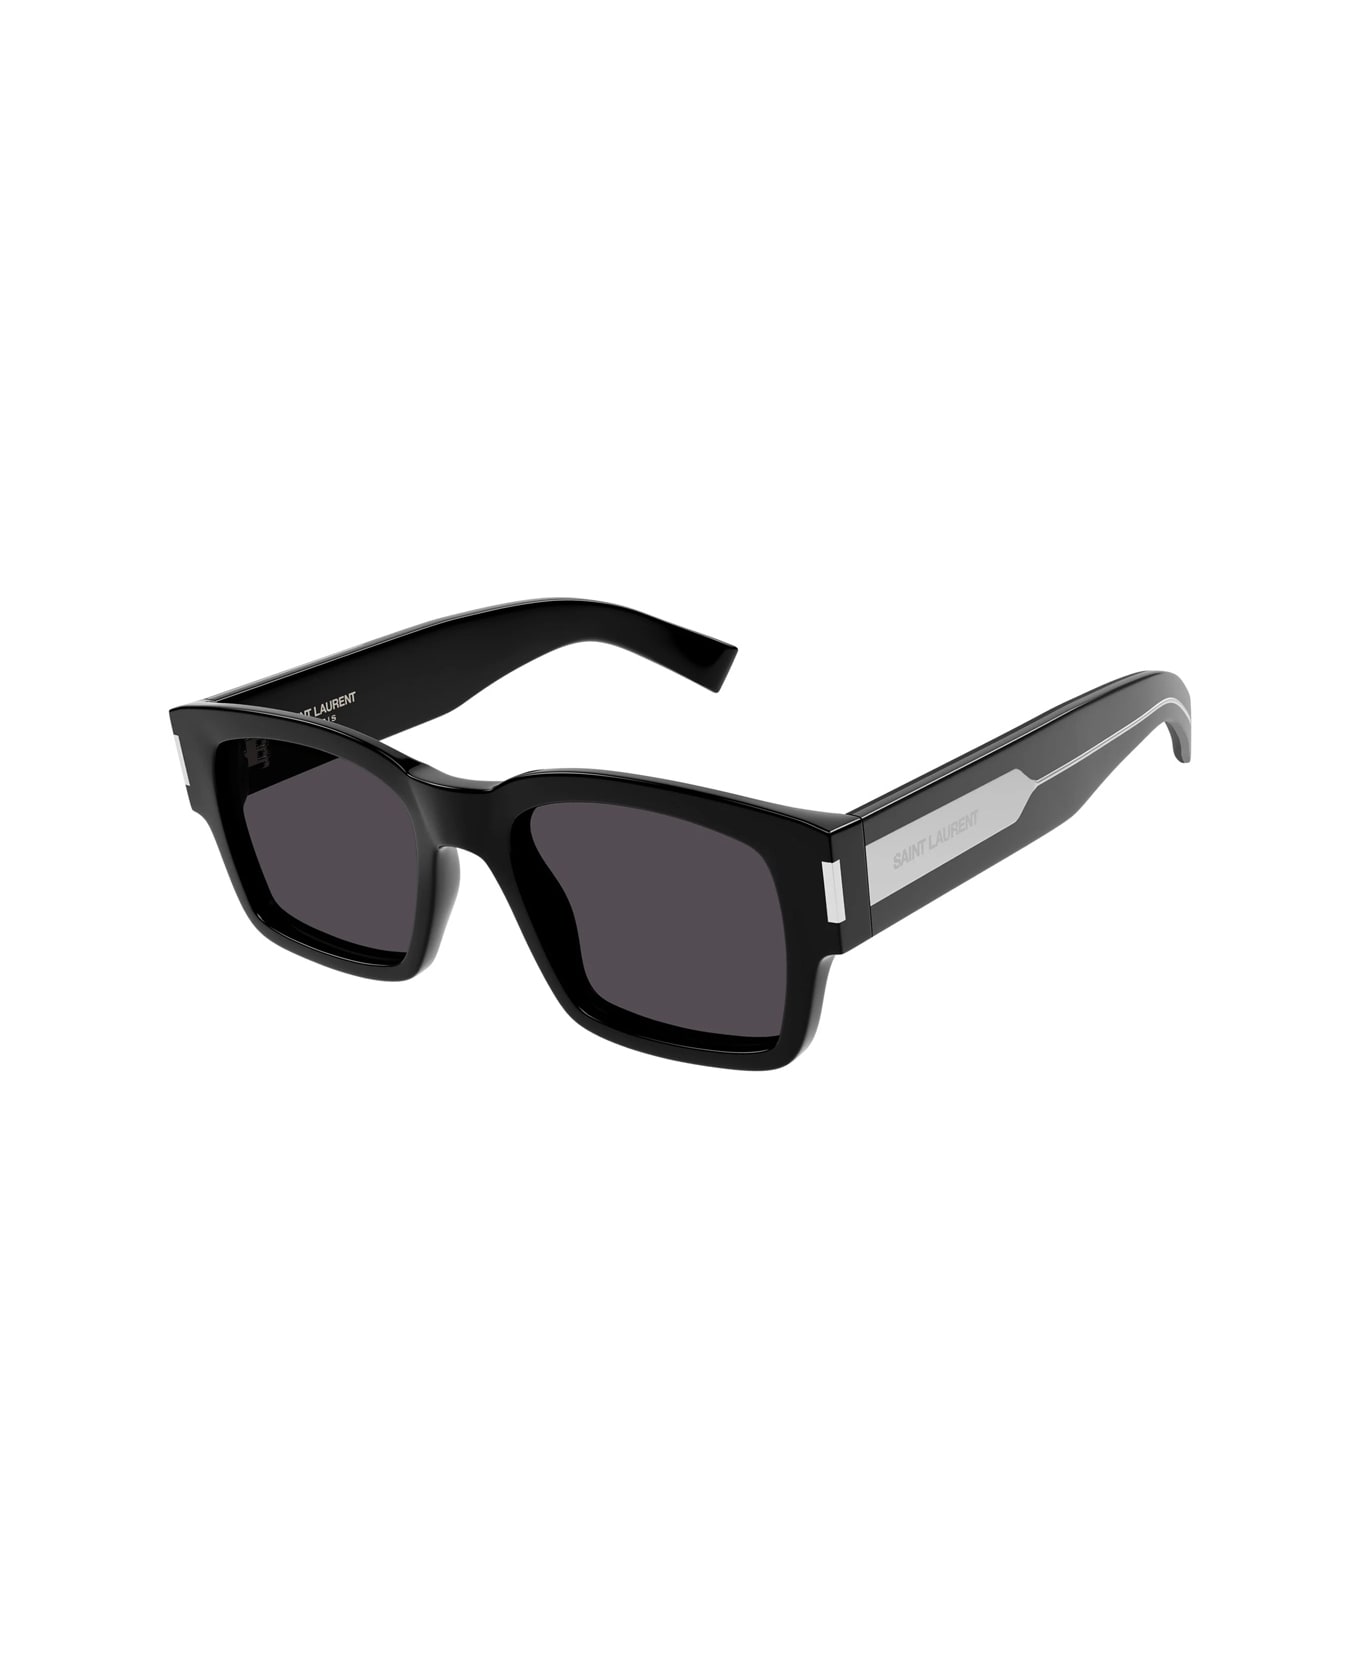 Saint Laurent Eyewear Sl 617 001 Sunglasses - Nero